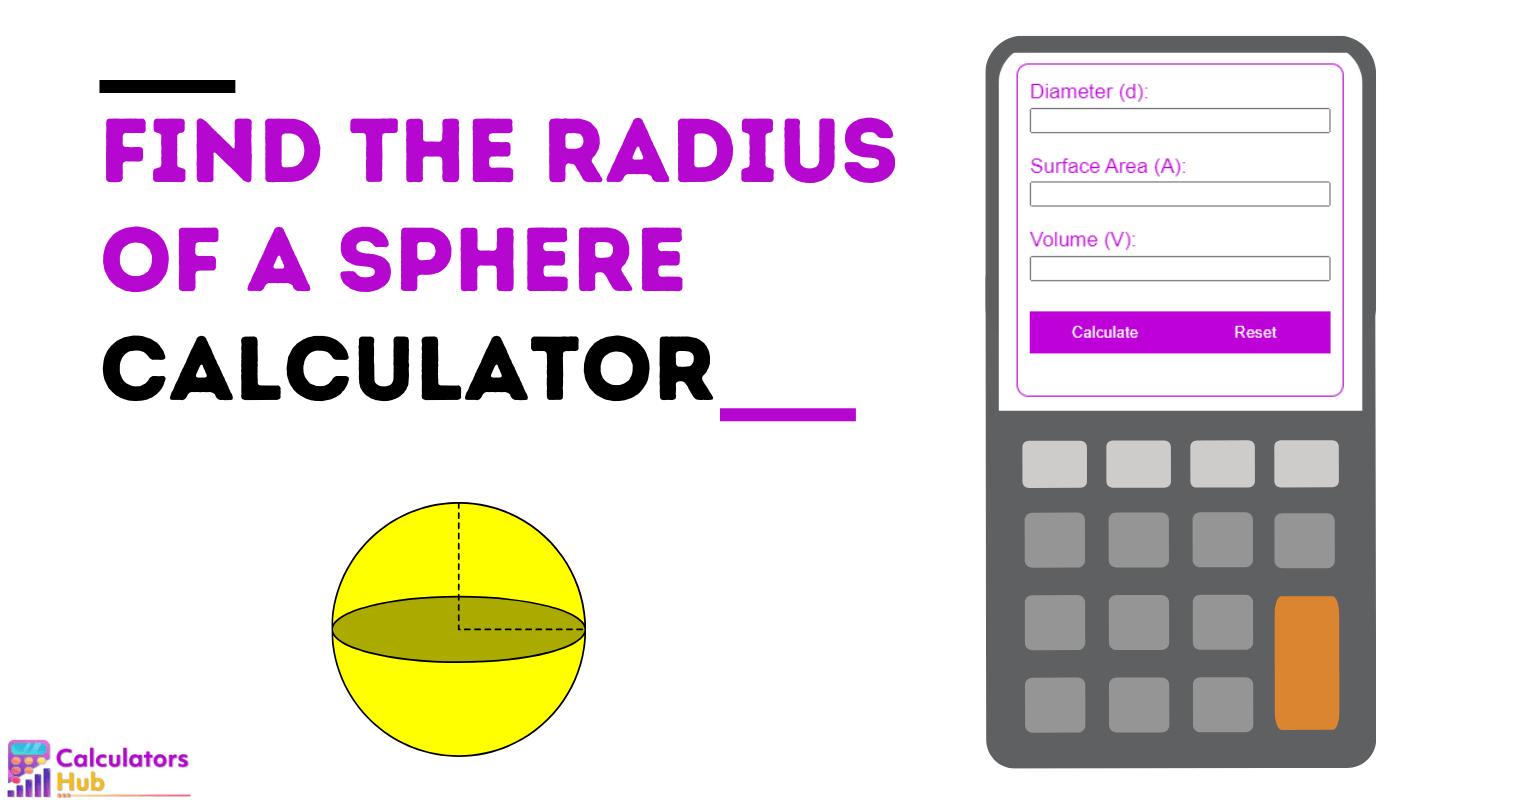 Find the Radius of a Sphere Calculator